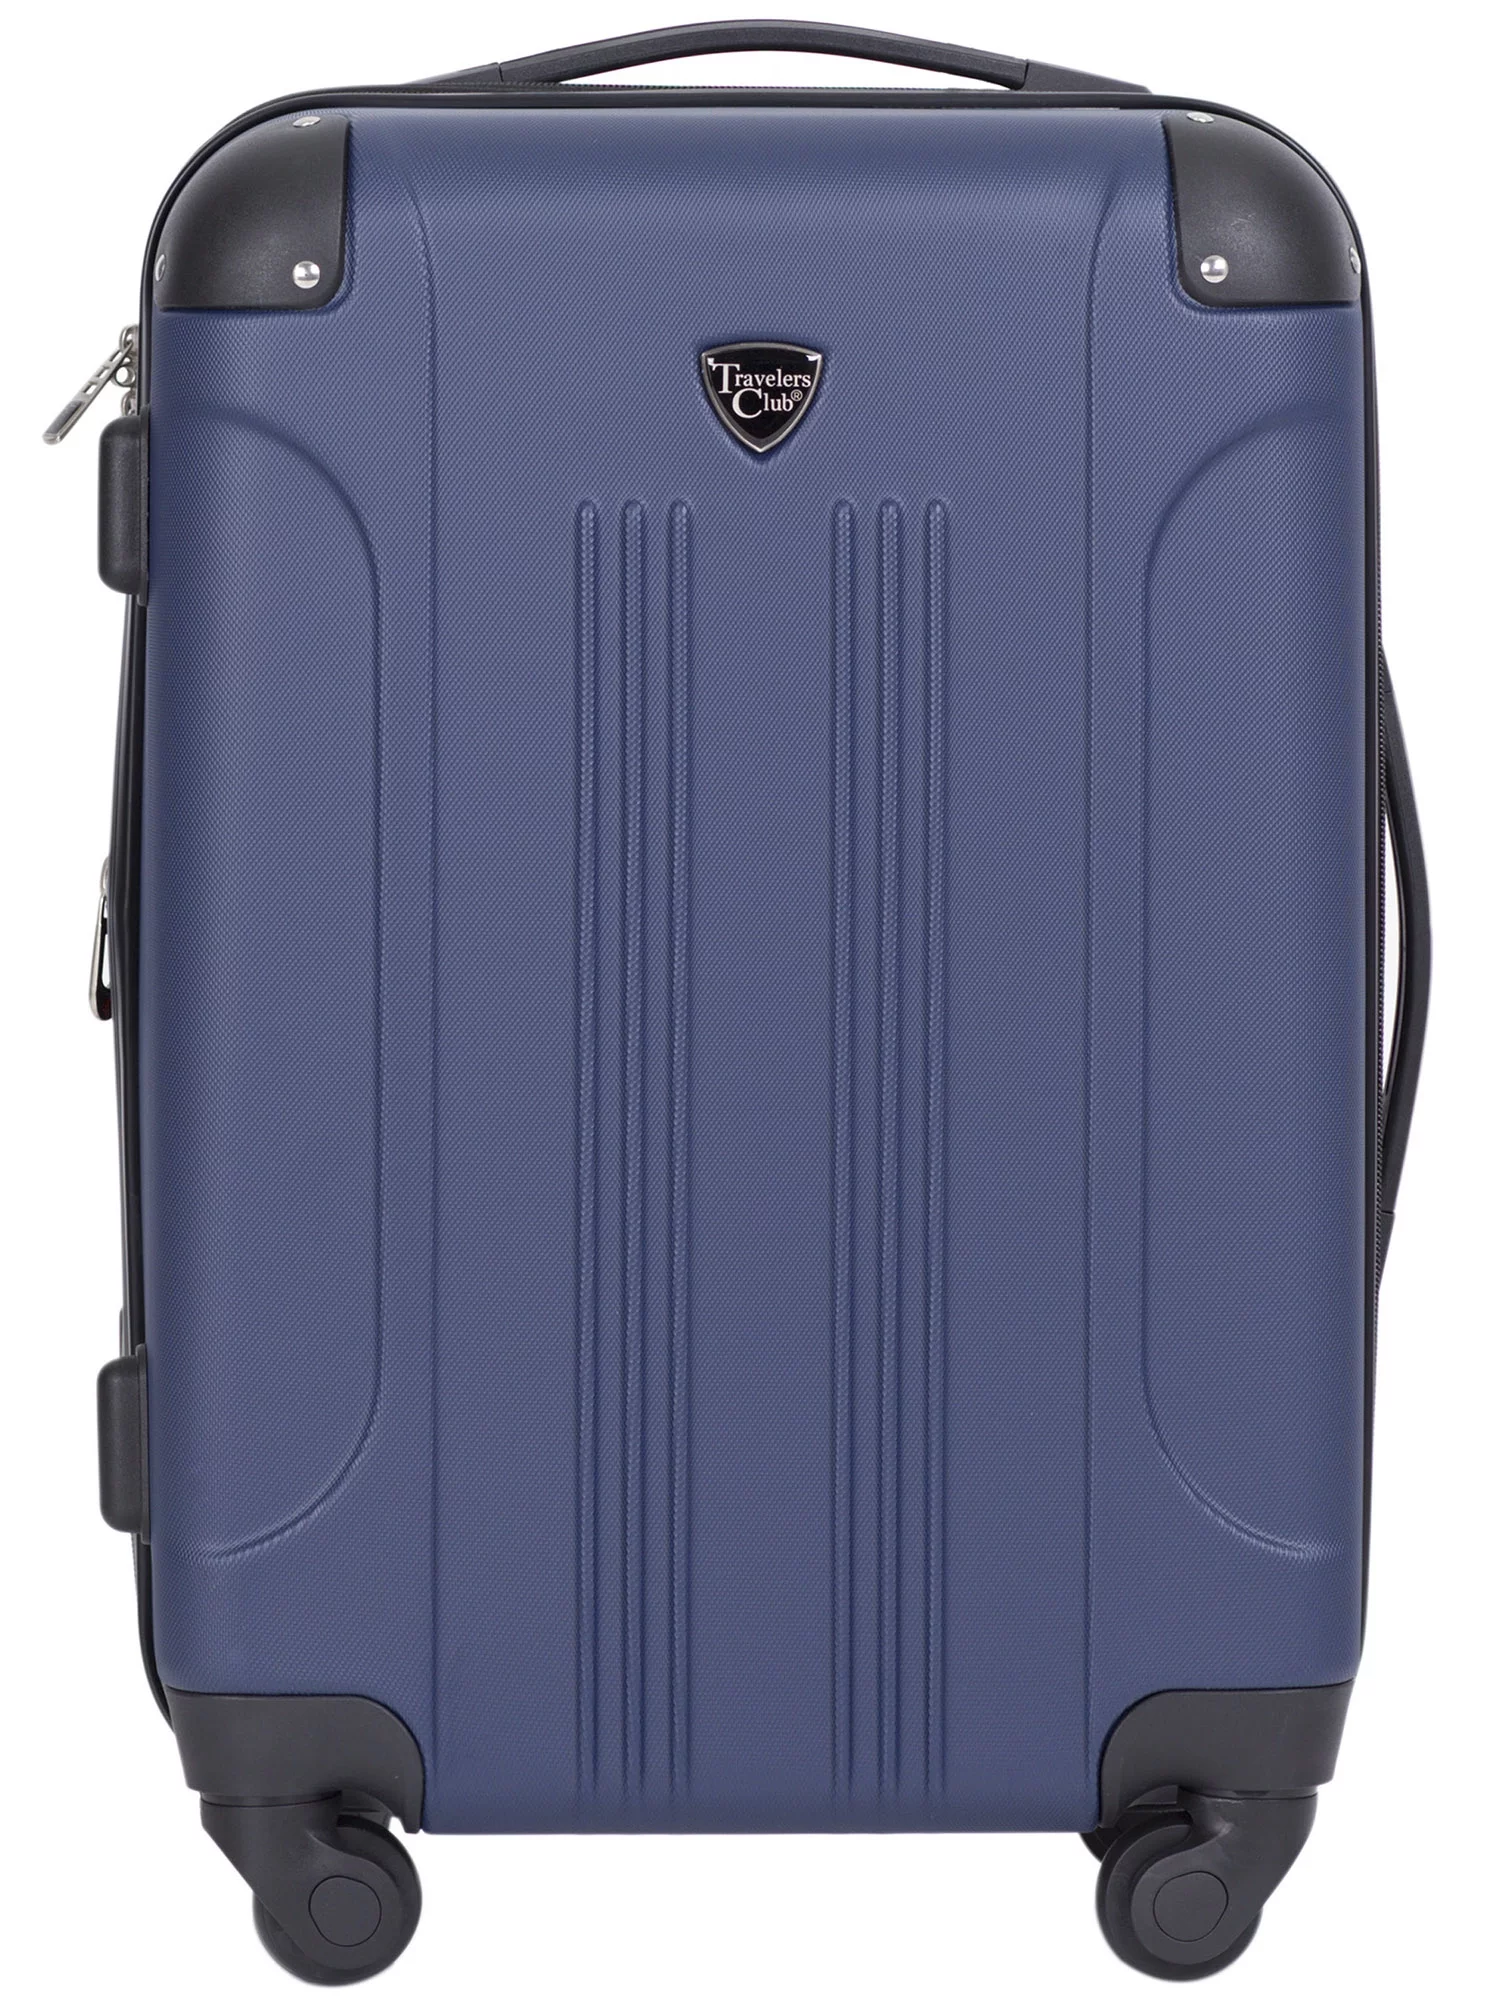 travelers club luggage